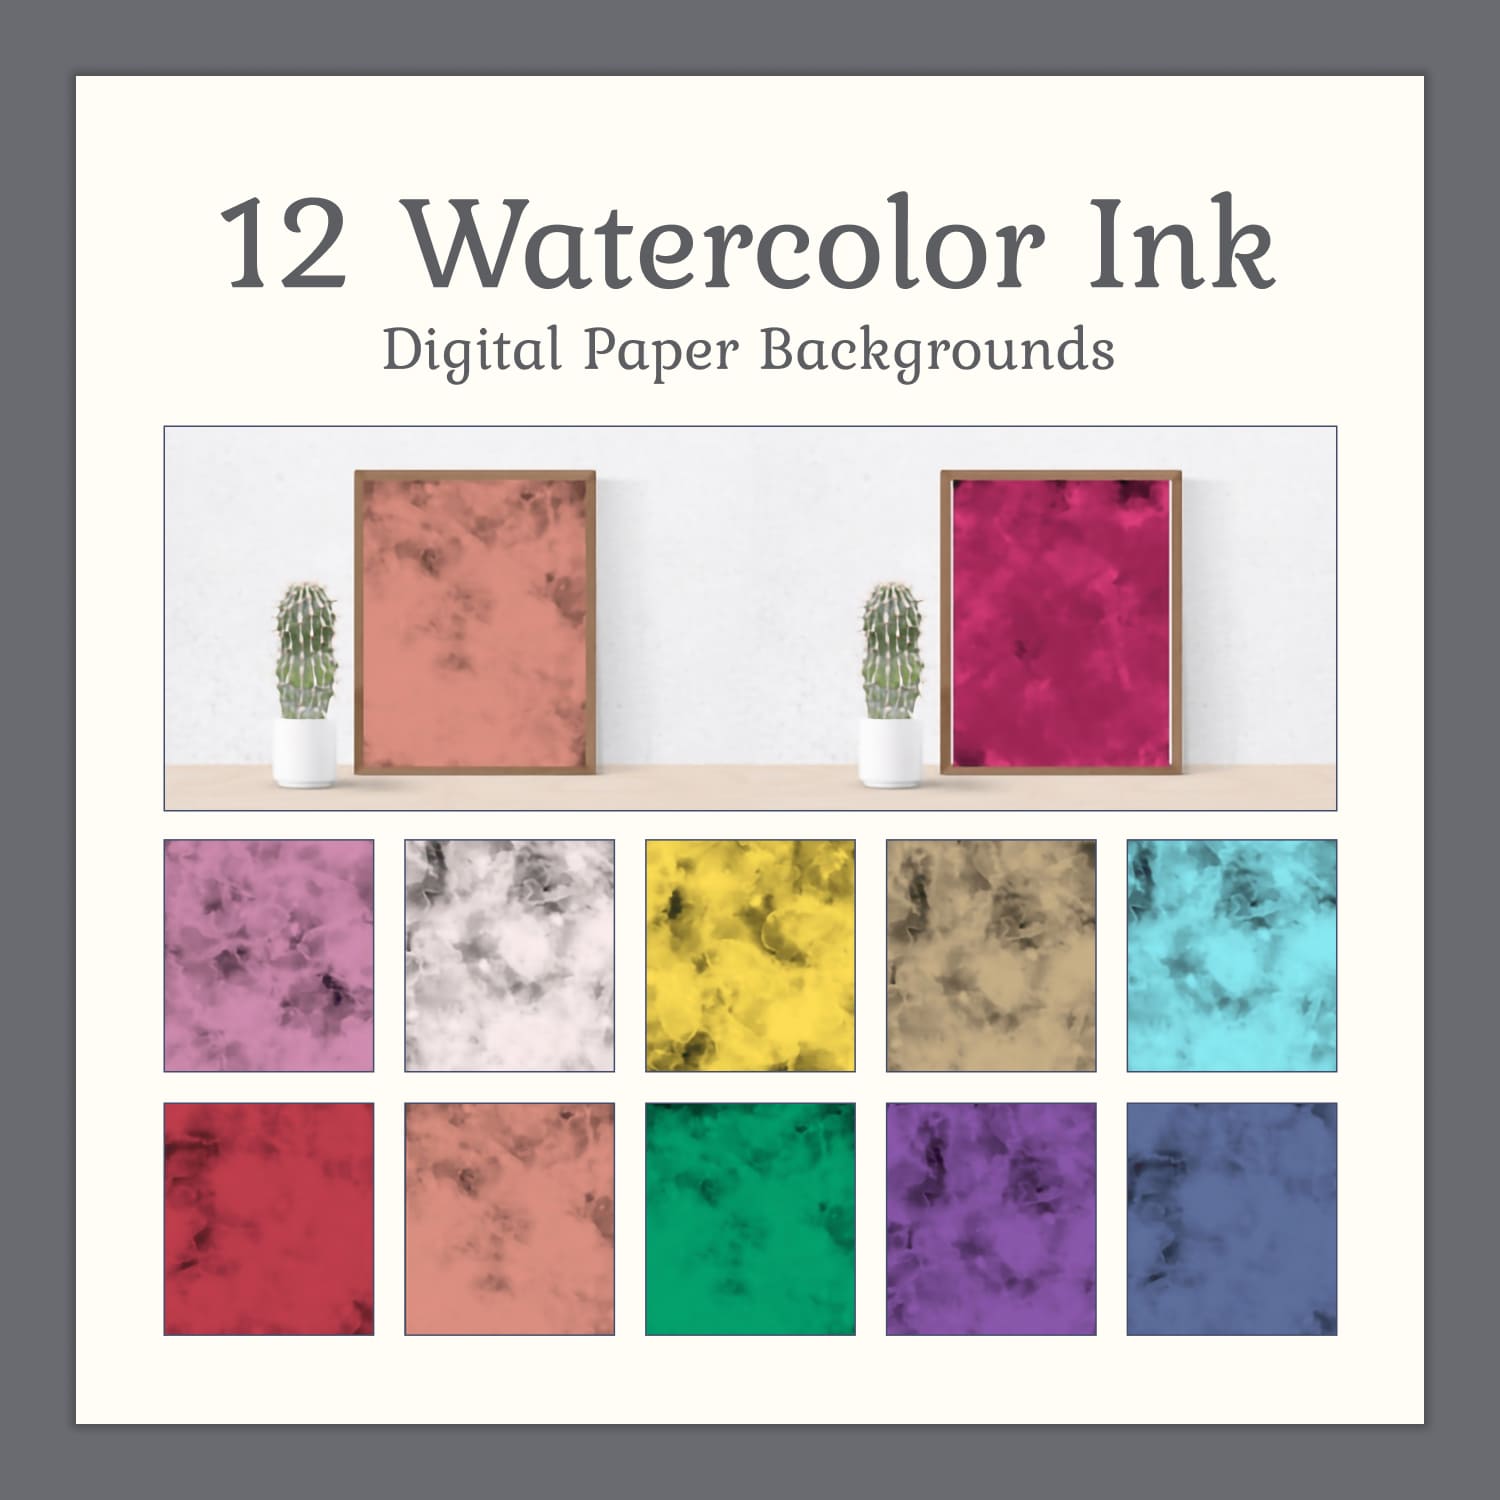 Watercolor Ink Digital Paper Backgrounds.